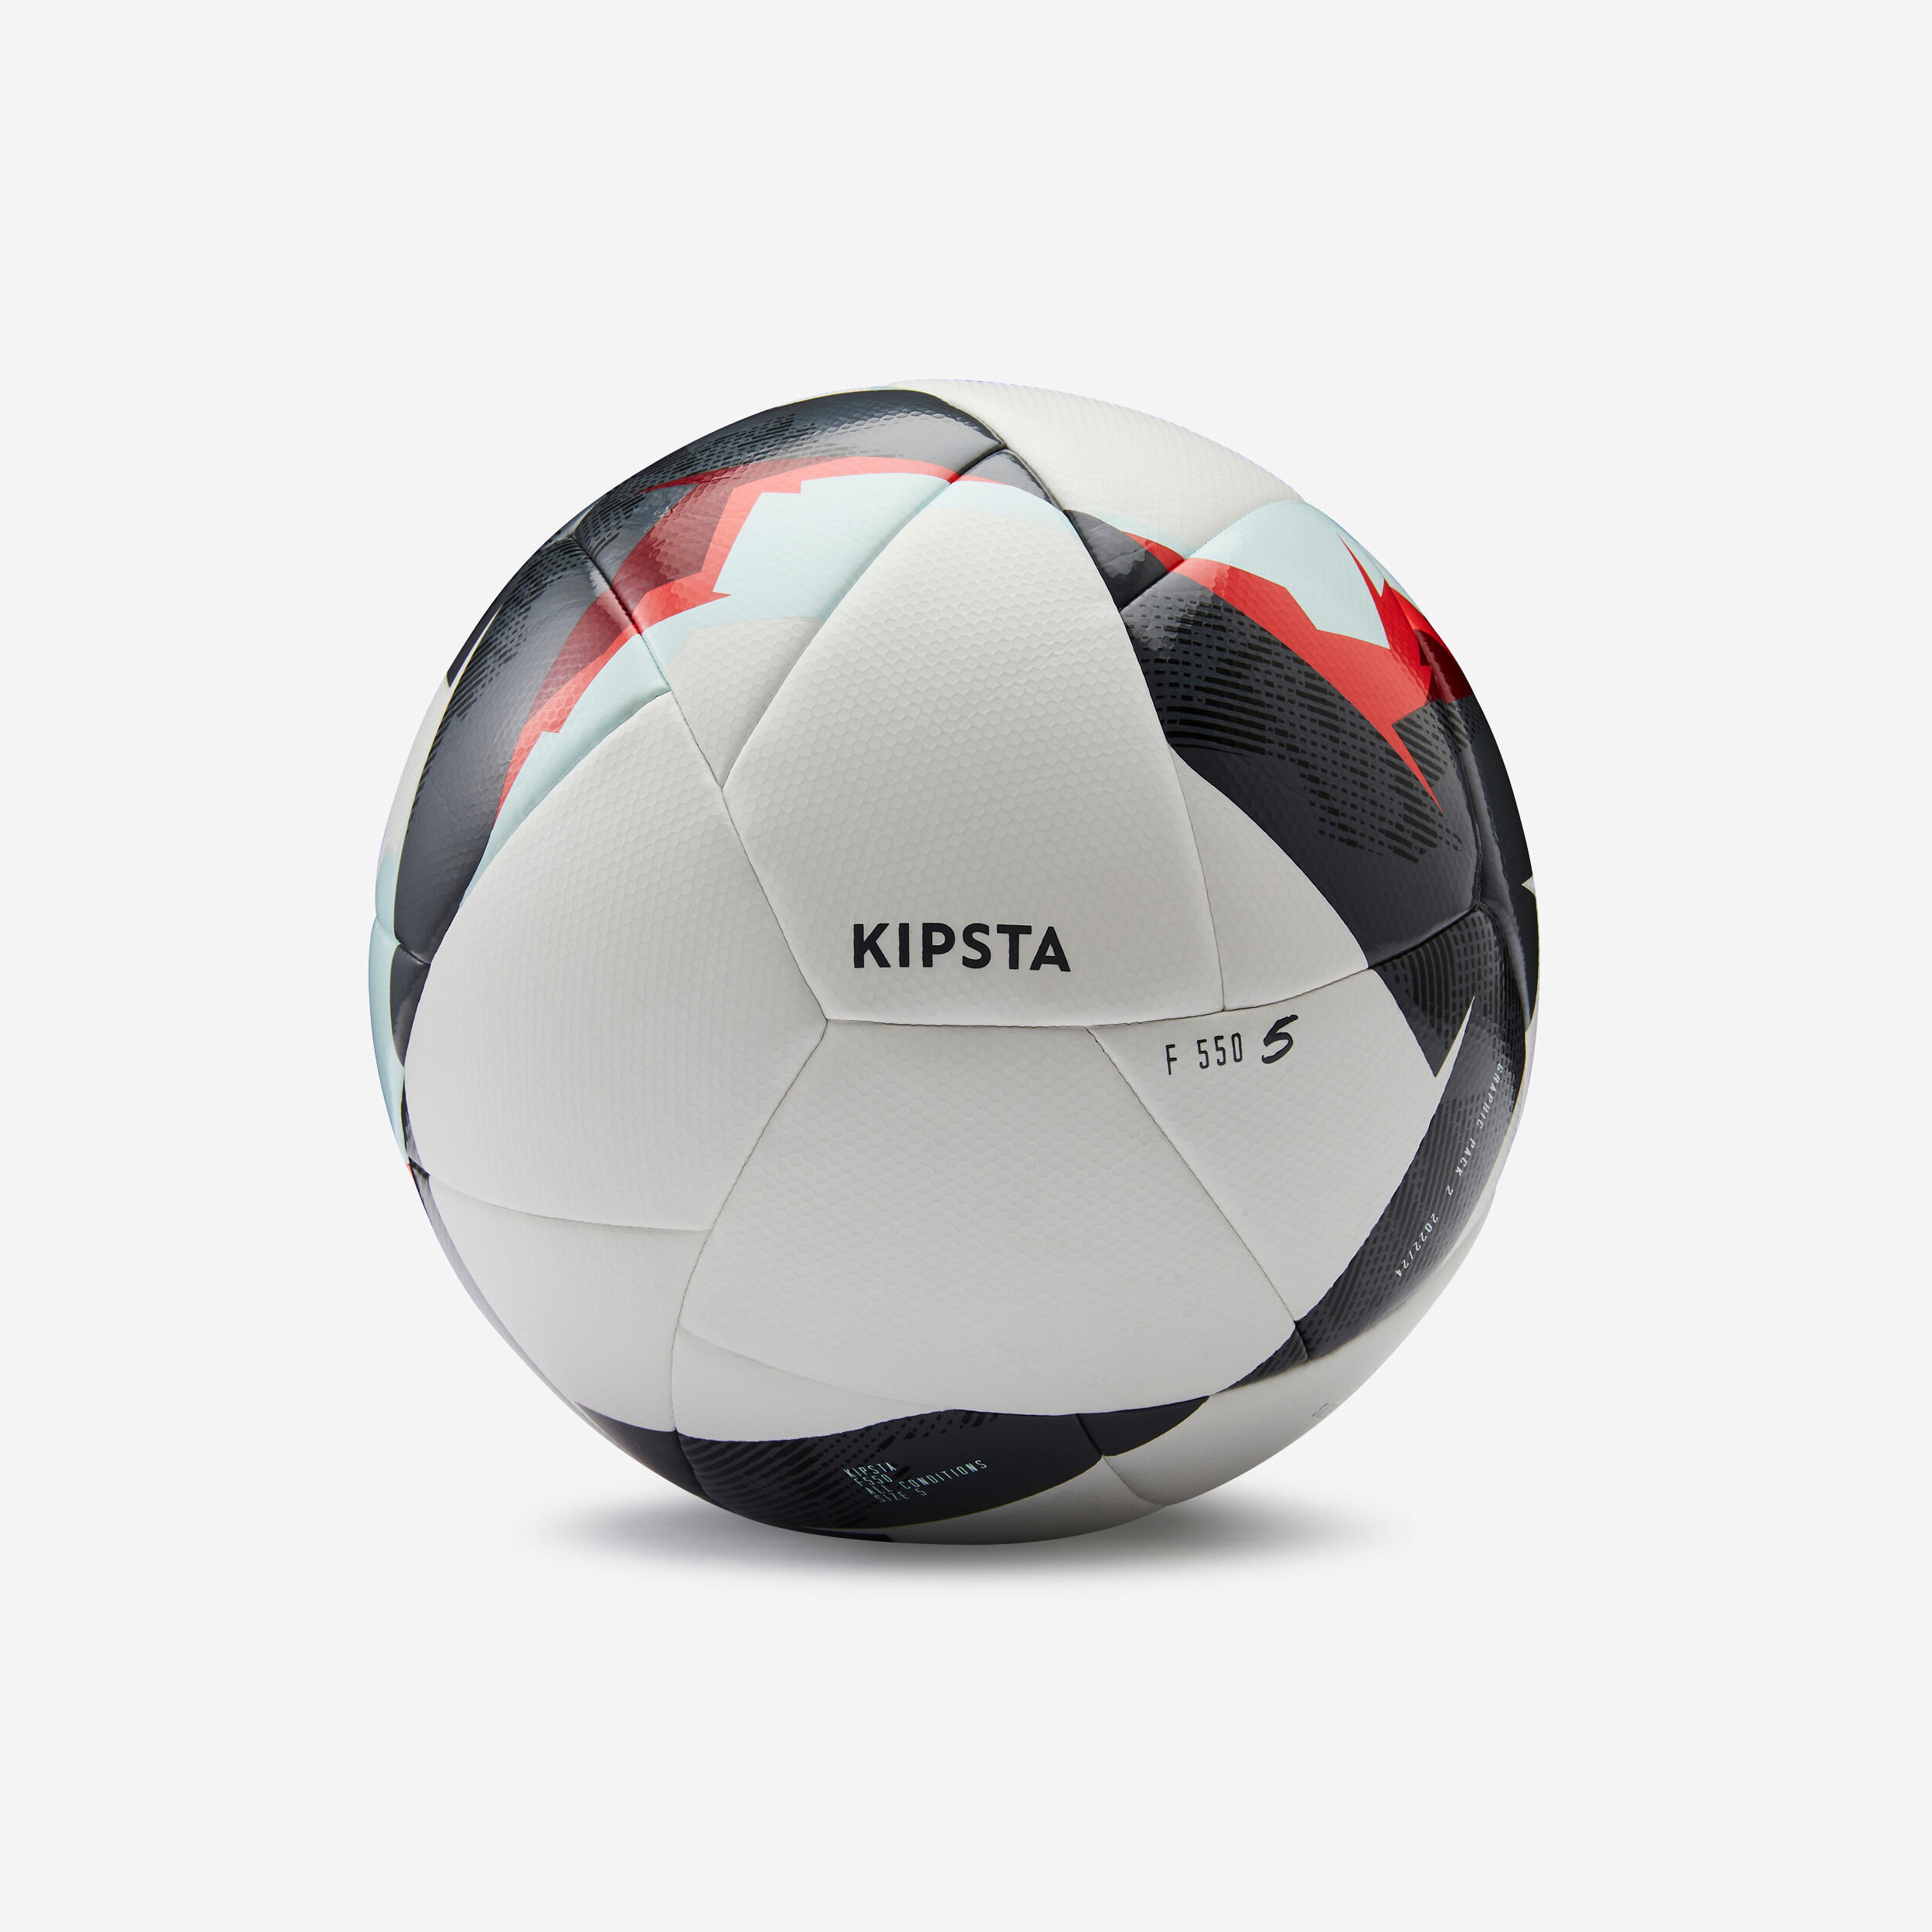 Hybrid Football FIFA Basic F550 Size 5 - White/Red 1/7